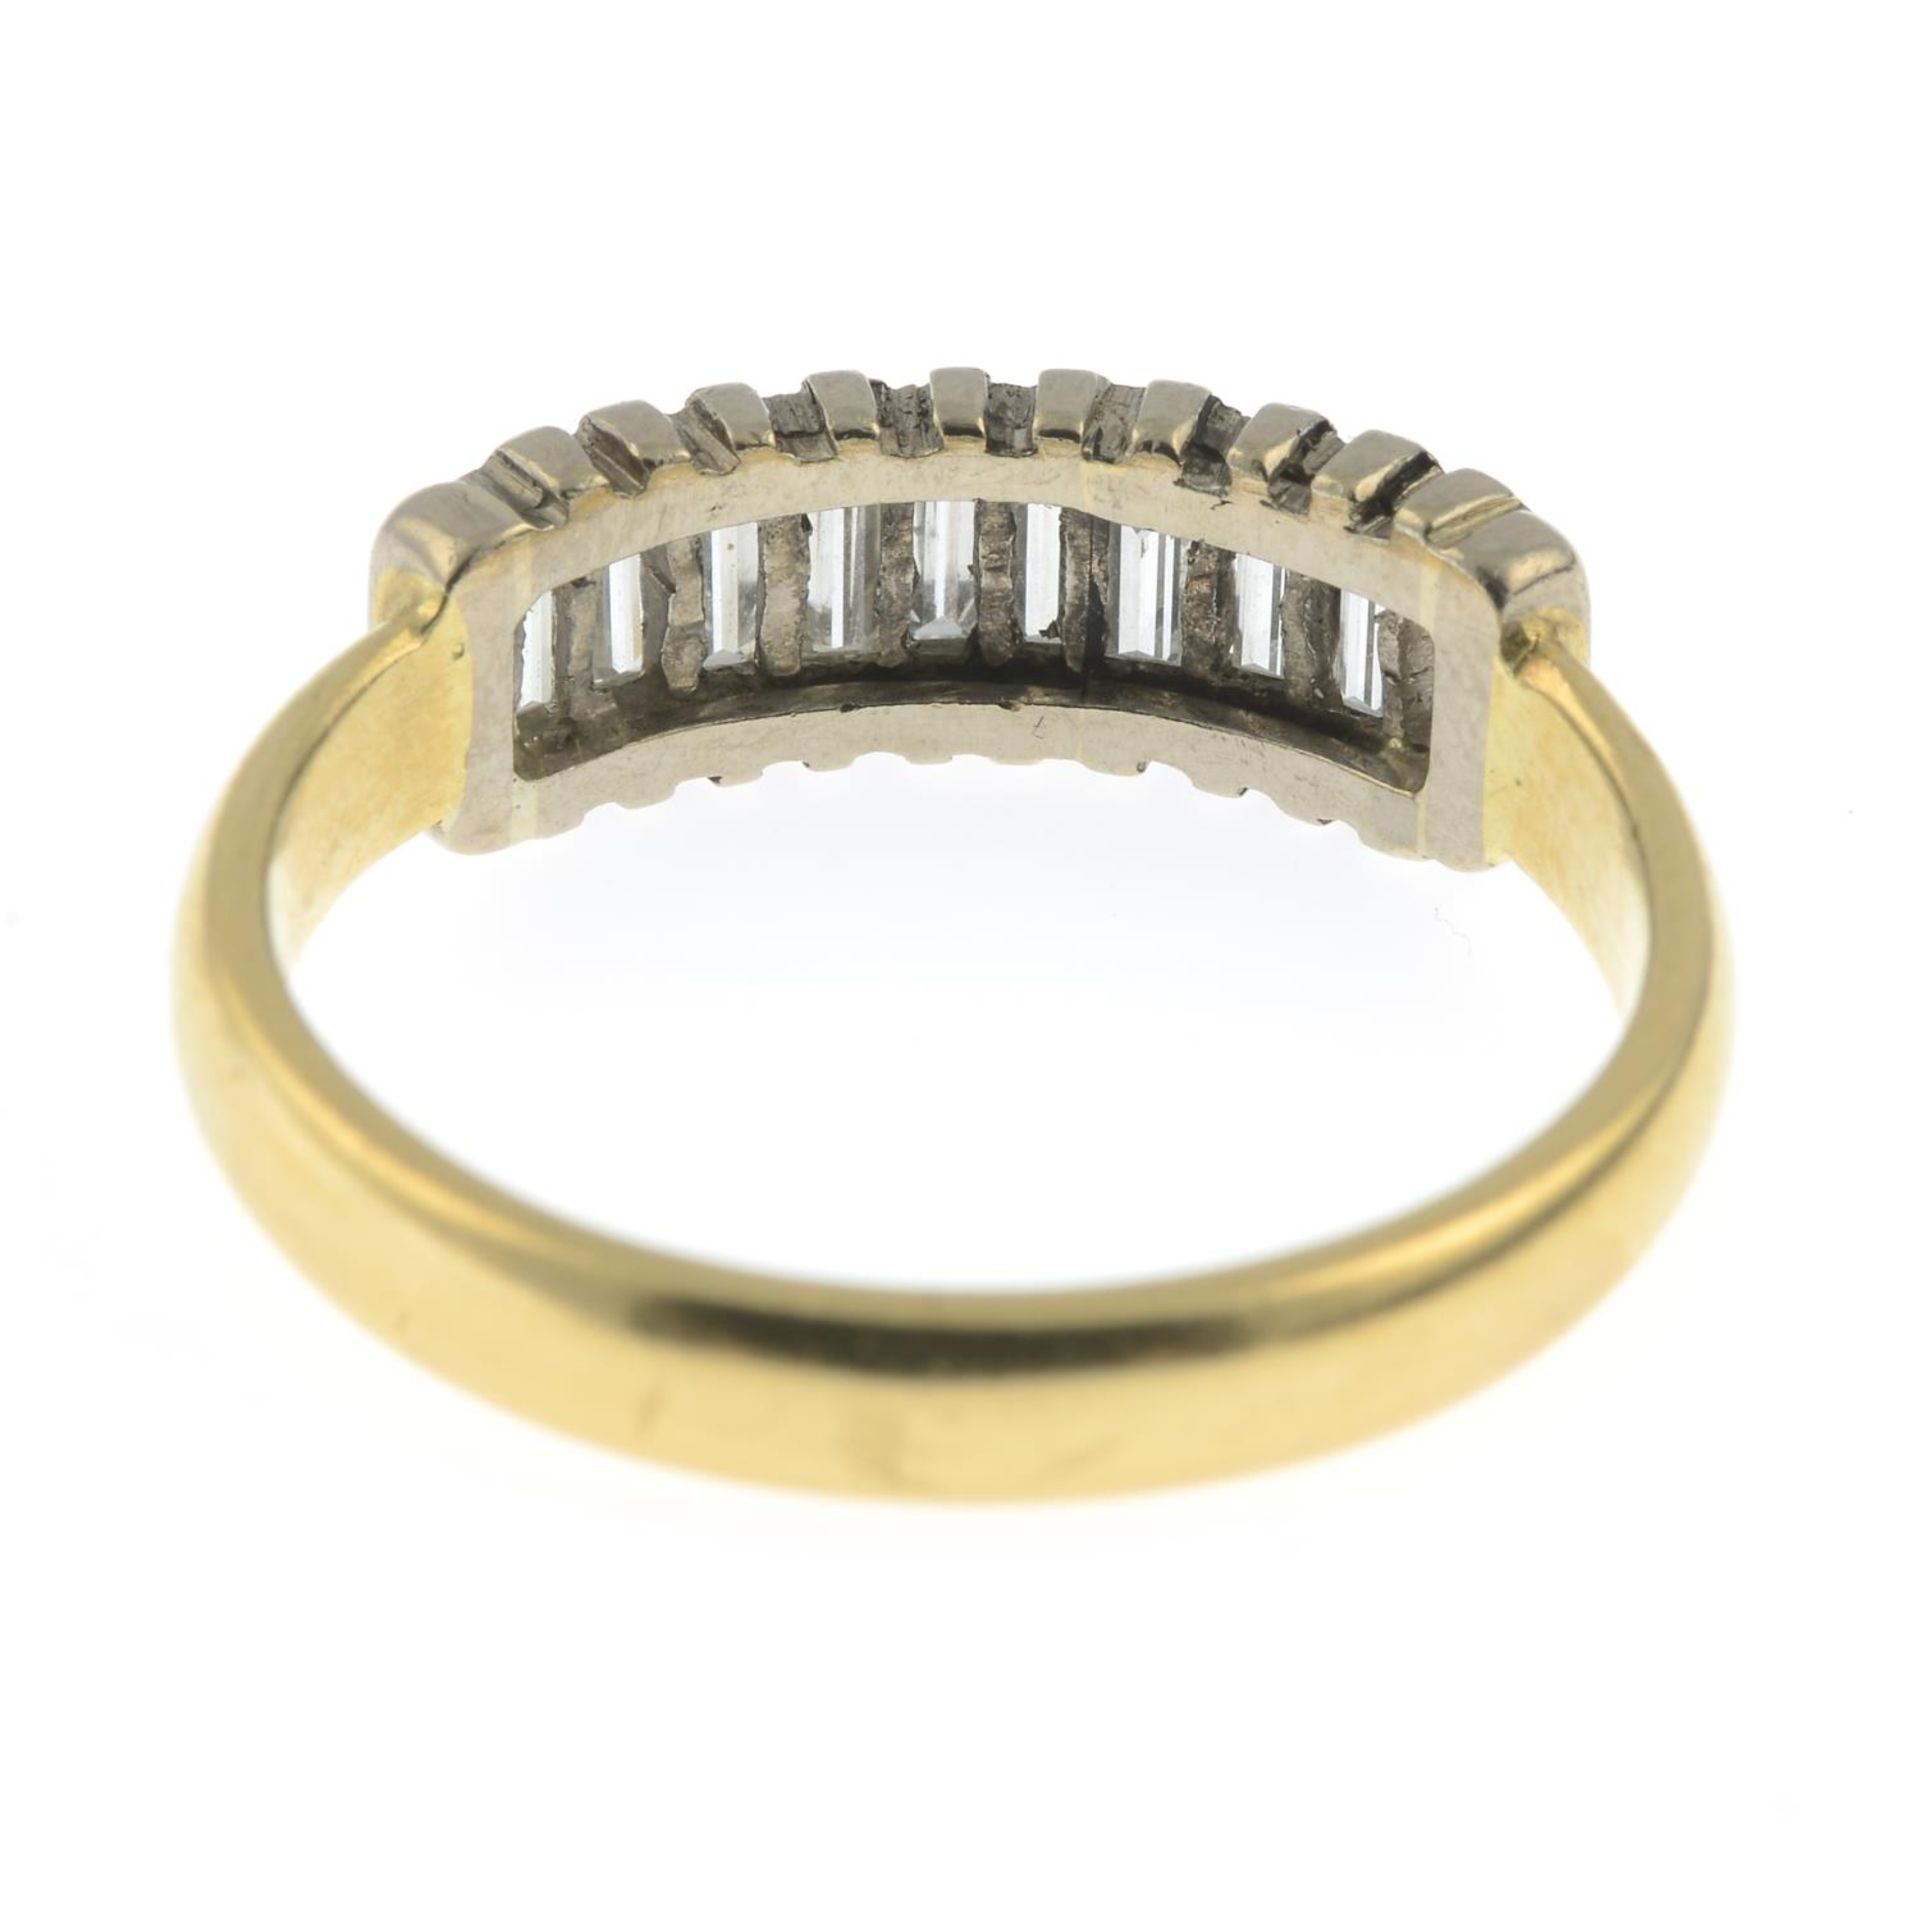 A baguette-cut diamond dress ring. - Image 3 of 3